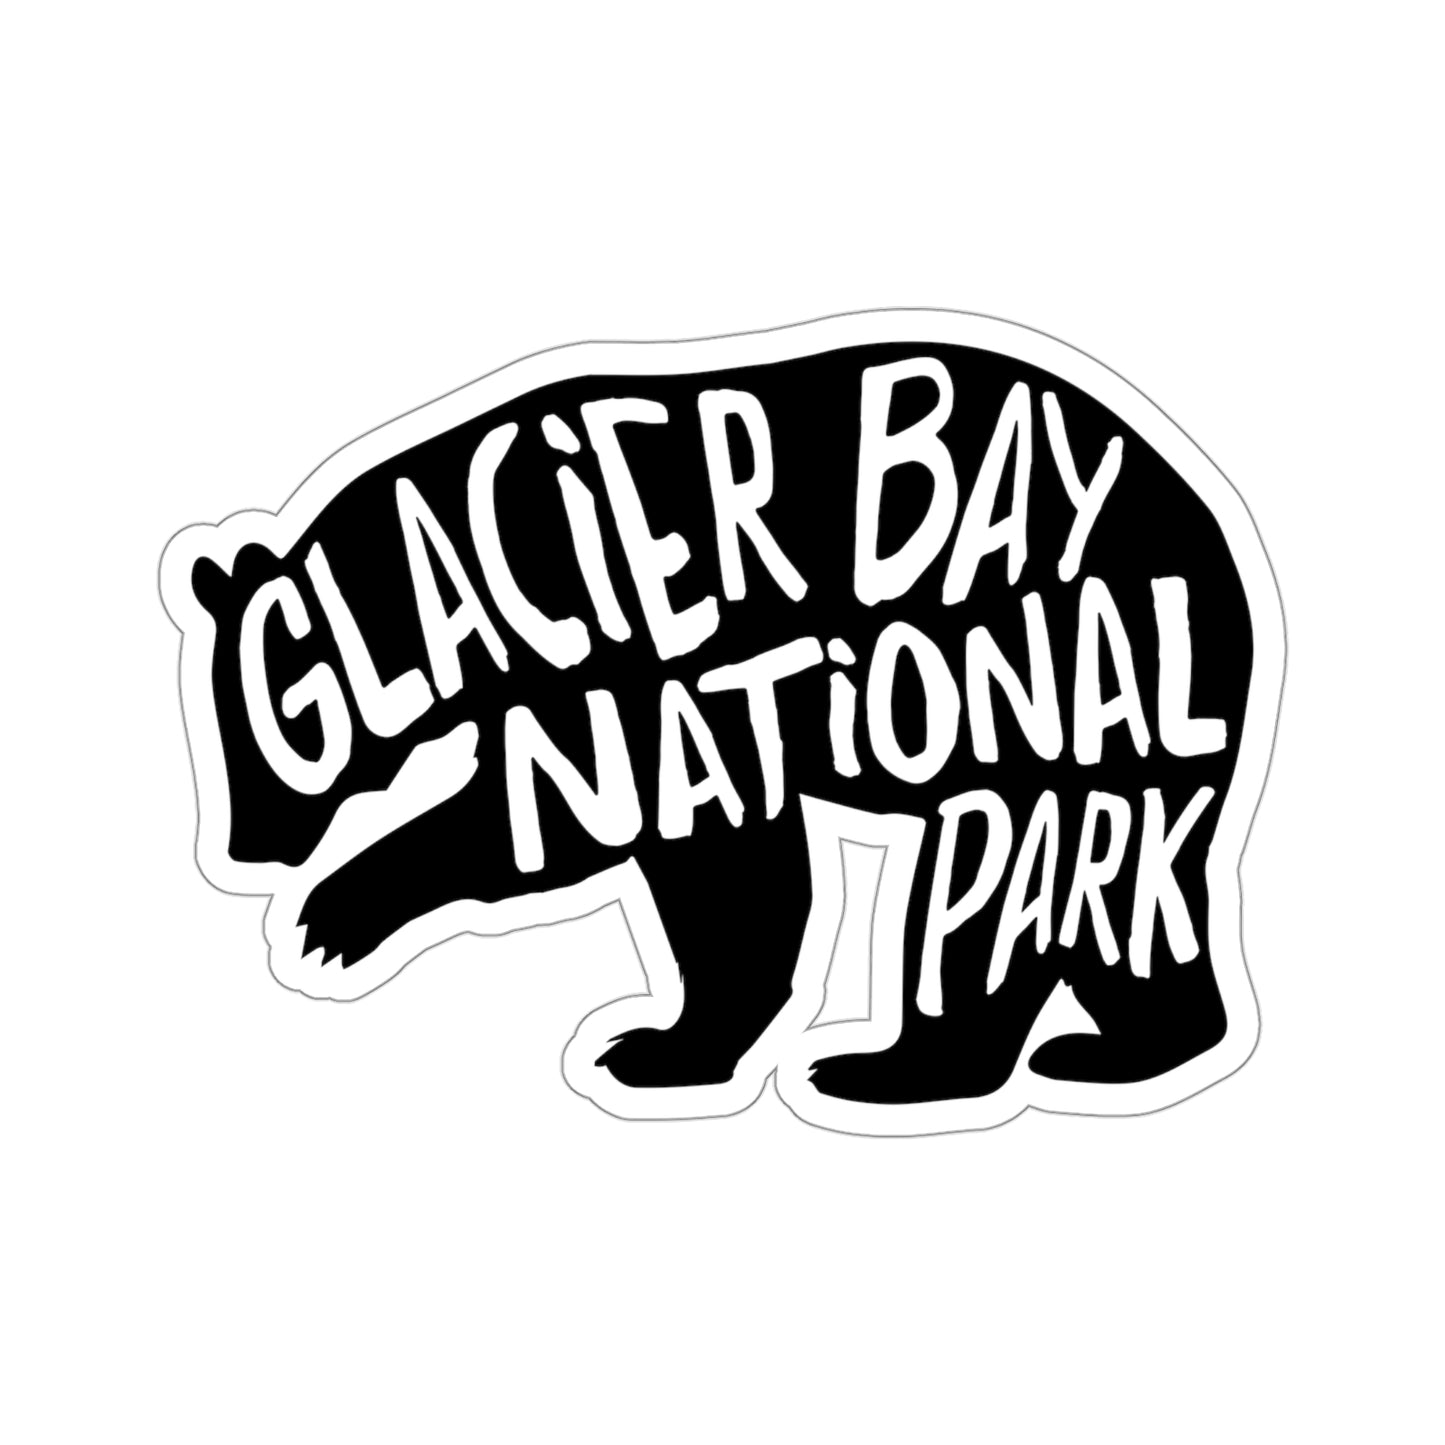 Glacier Bay National Park Sticker - Grizzly Bear